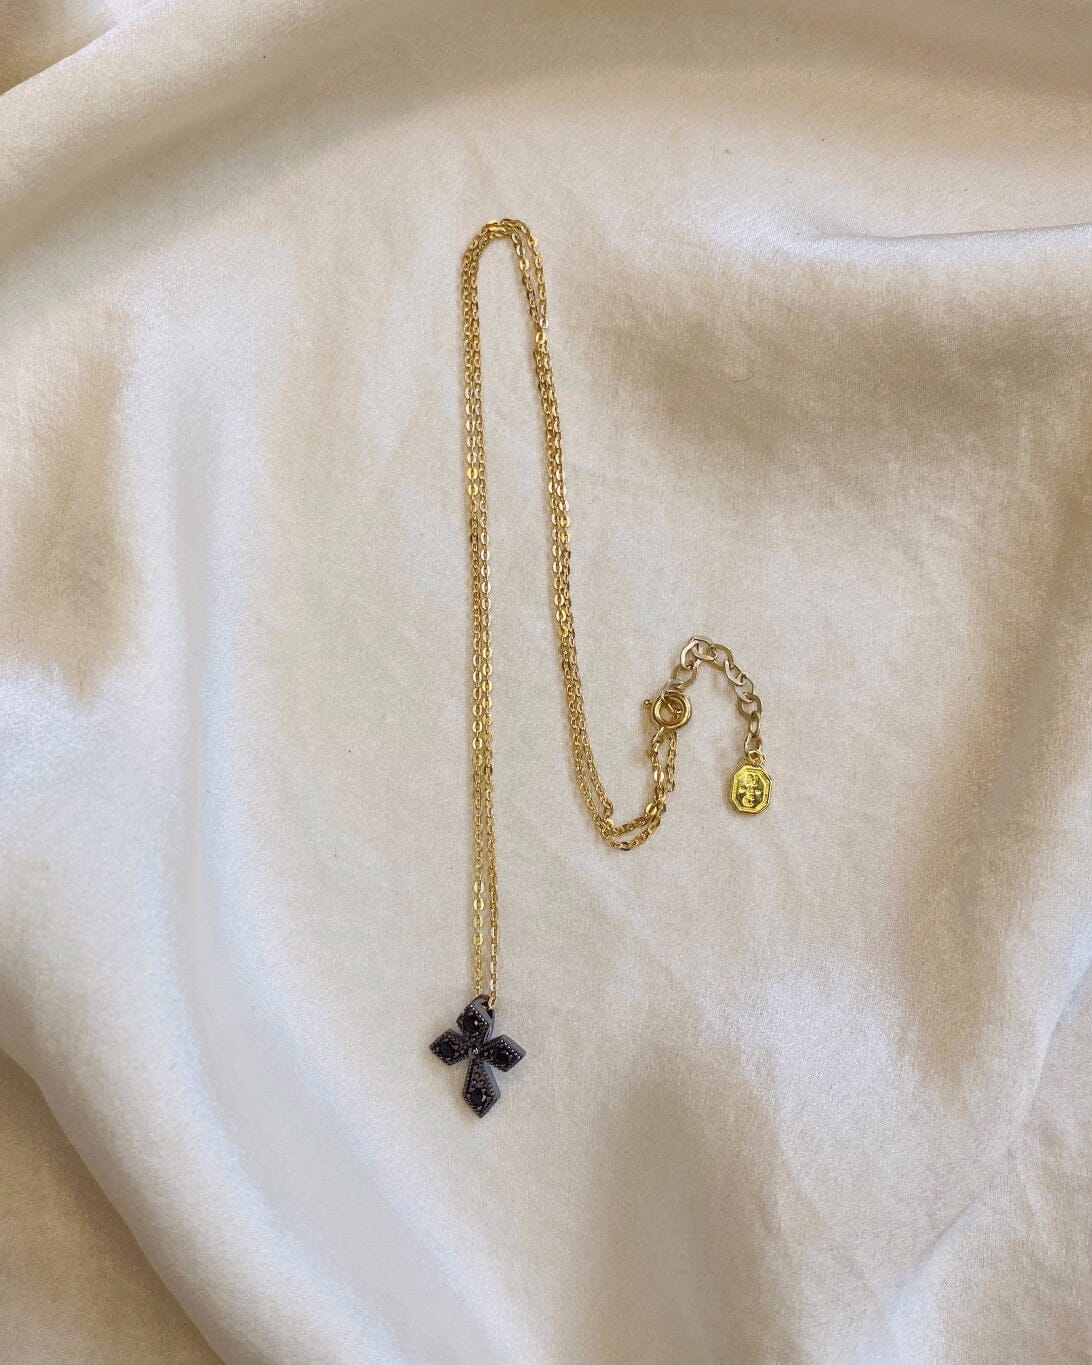 vermeil  stunning  simple  rings  necklace  locker  jewelry  jewellery  cute  cross  colliers  collier  chic  black  bijoux